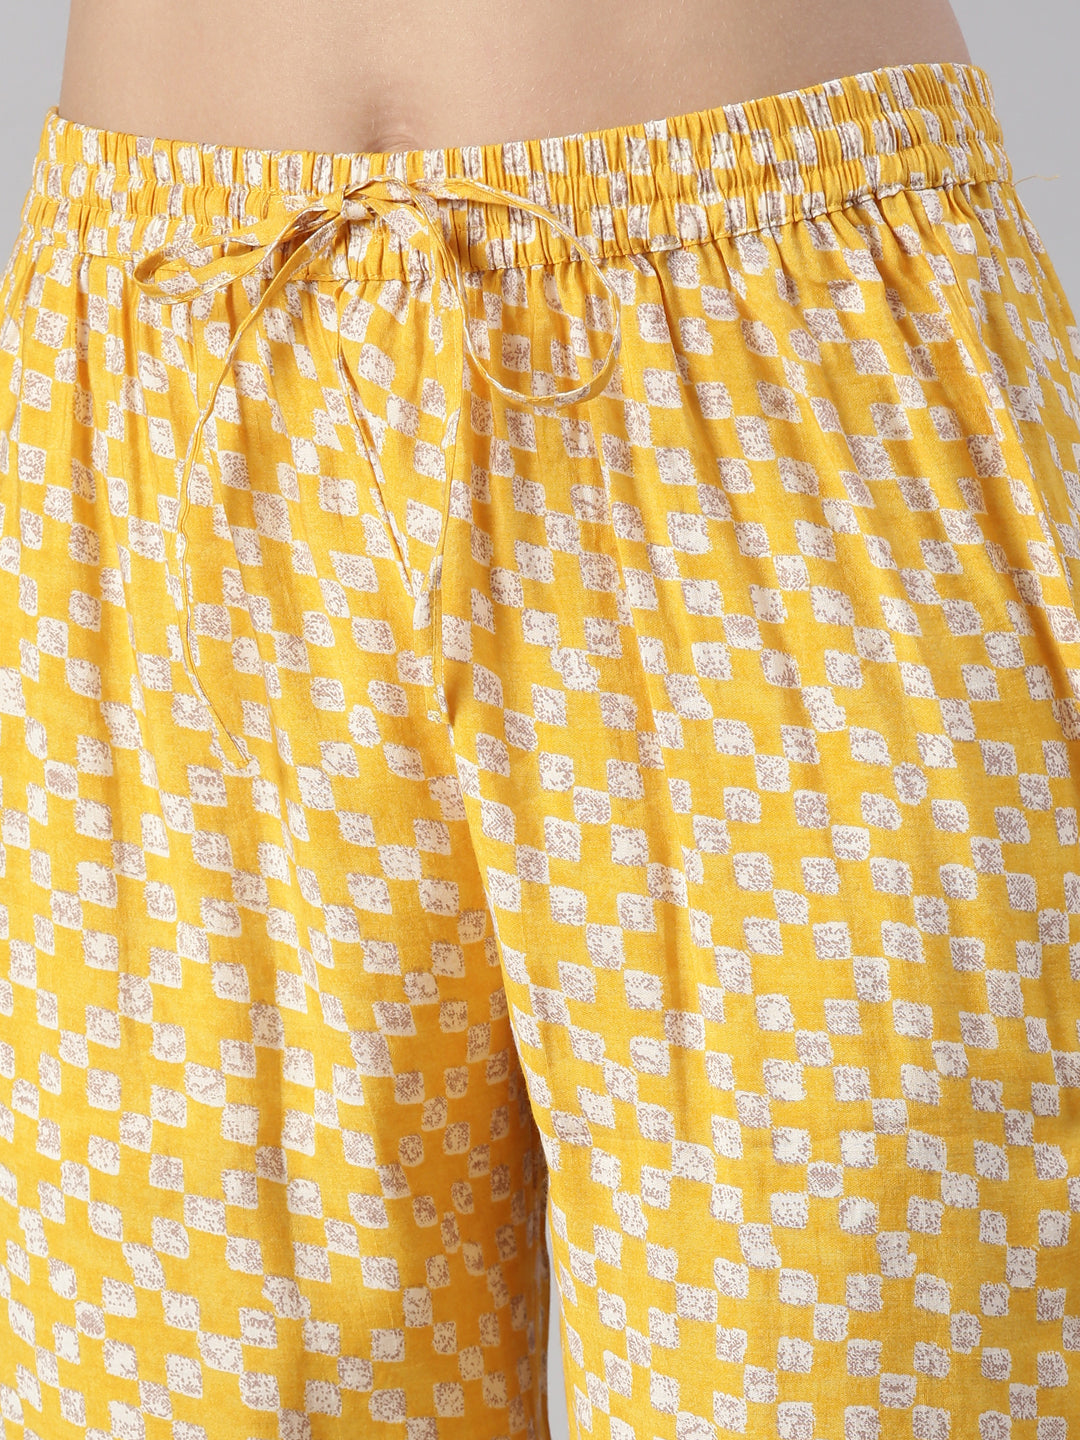 Neerus Women  Yellow Yoke Design Calf Length Kurta And Trousers With Dupatta